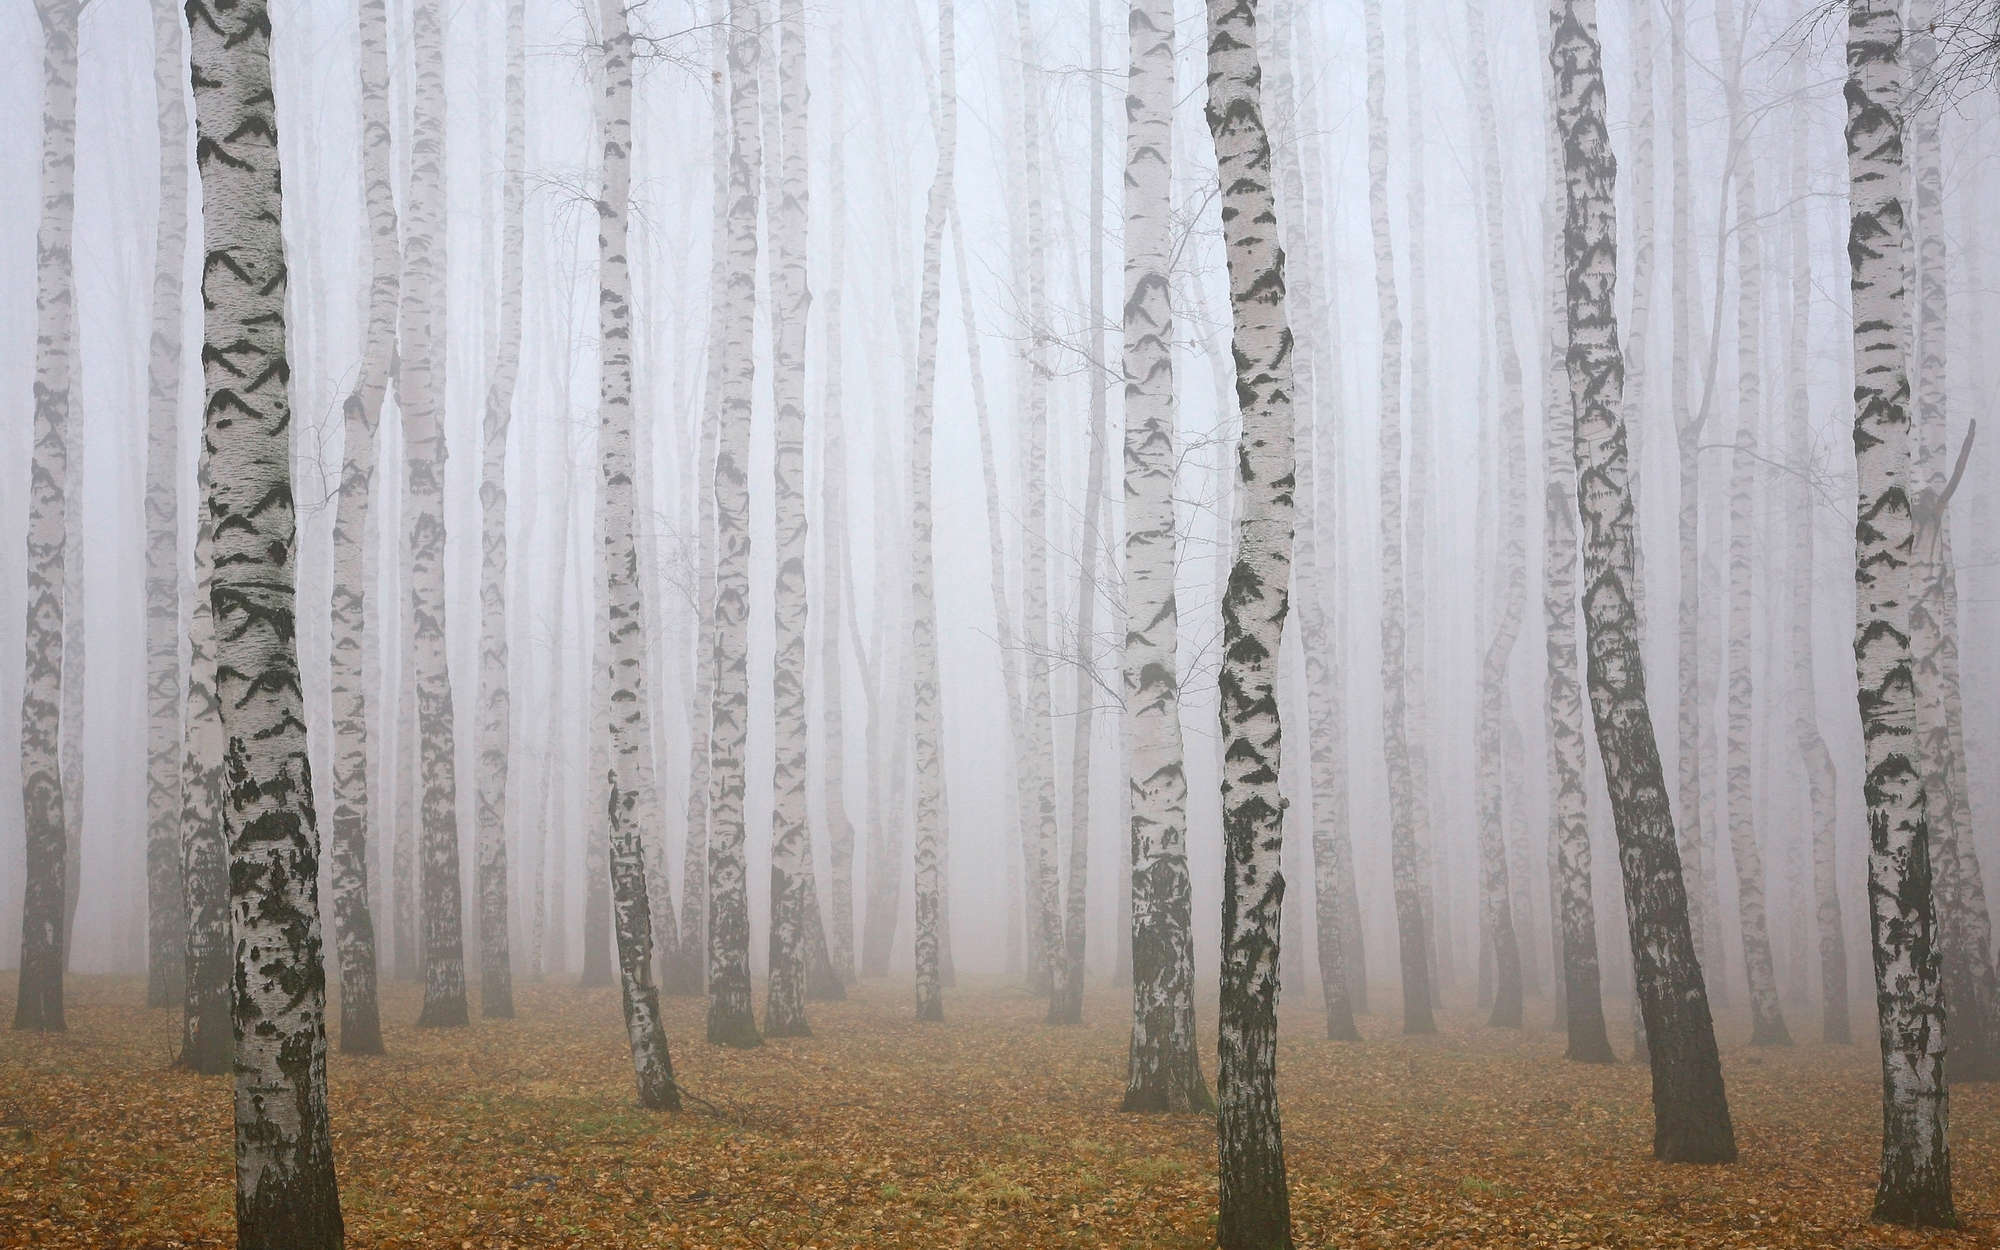             Birch Forest in the Mist Wallpaper - Premium Smooth Non-woven
        